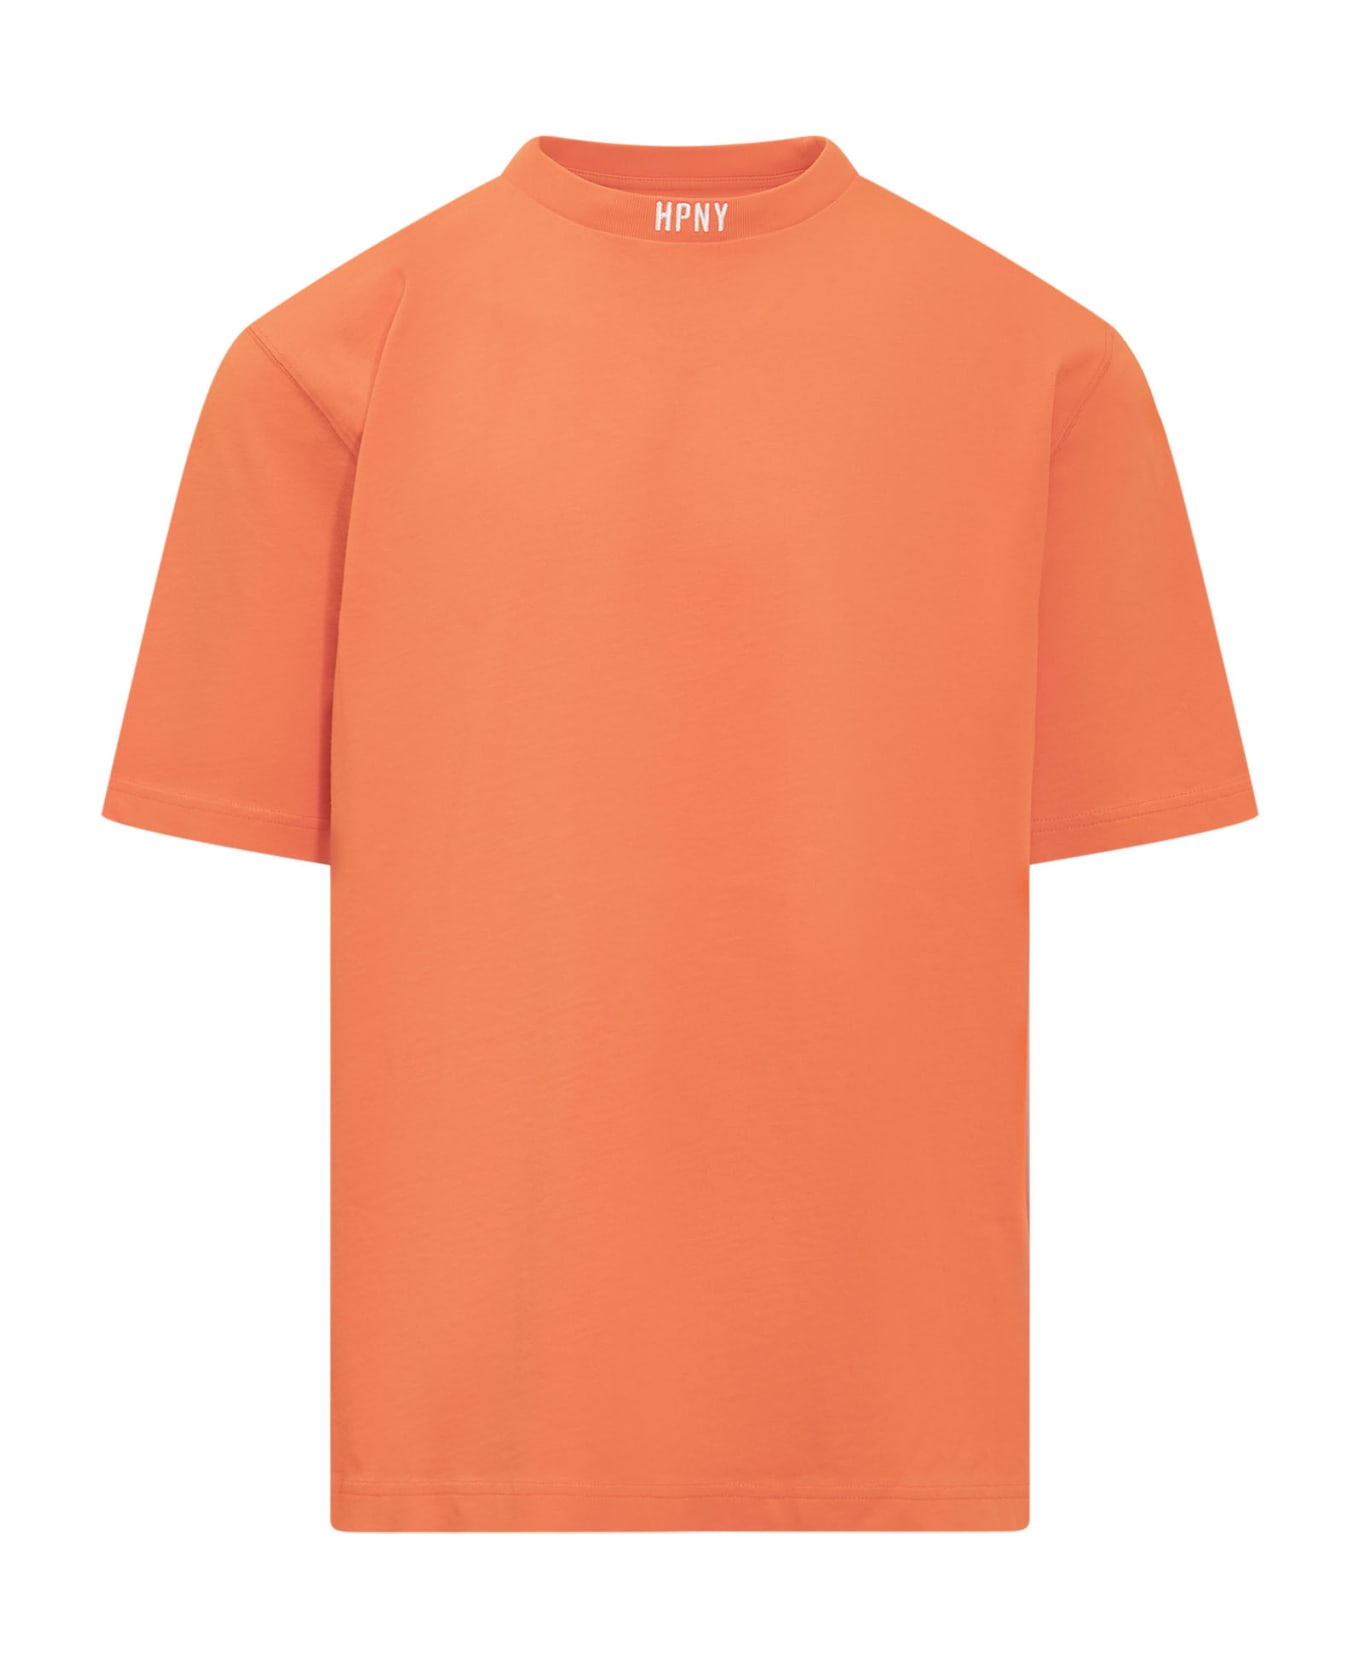 HERON PRESTON Hpny Embroidery T-shirt - Orange/white シャツ